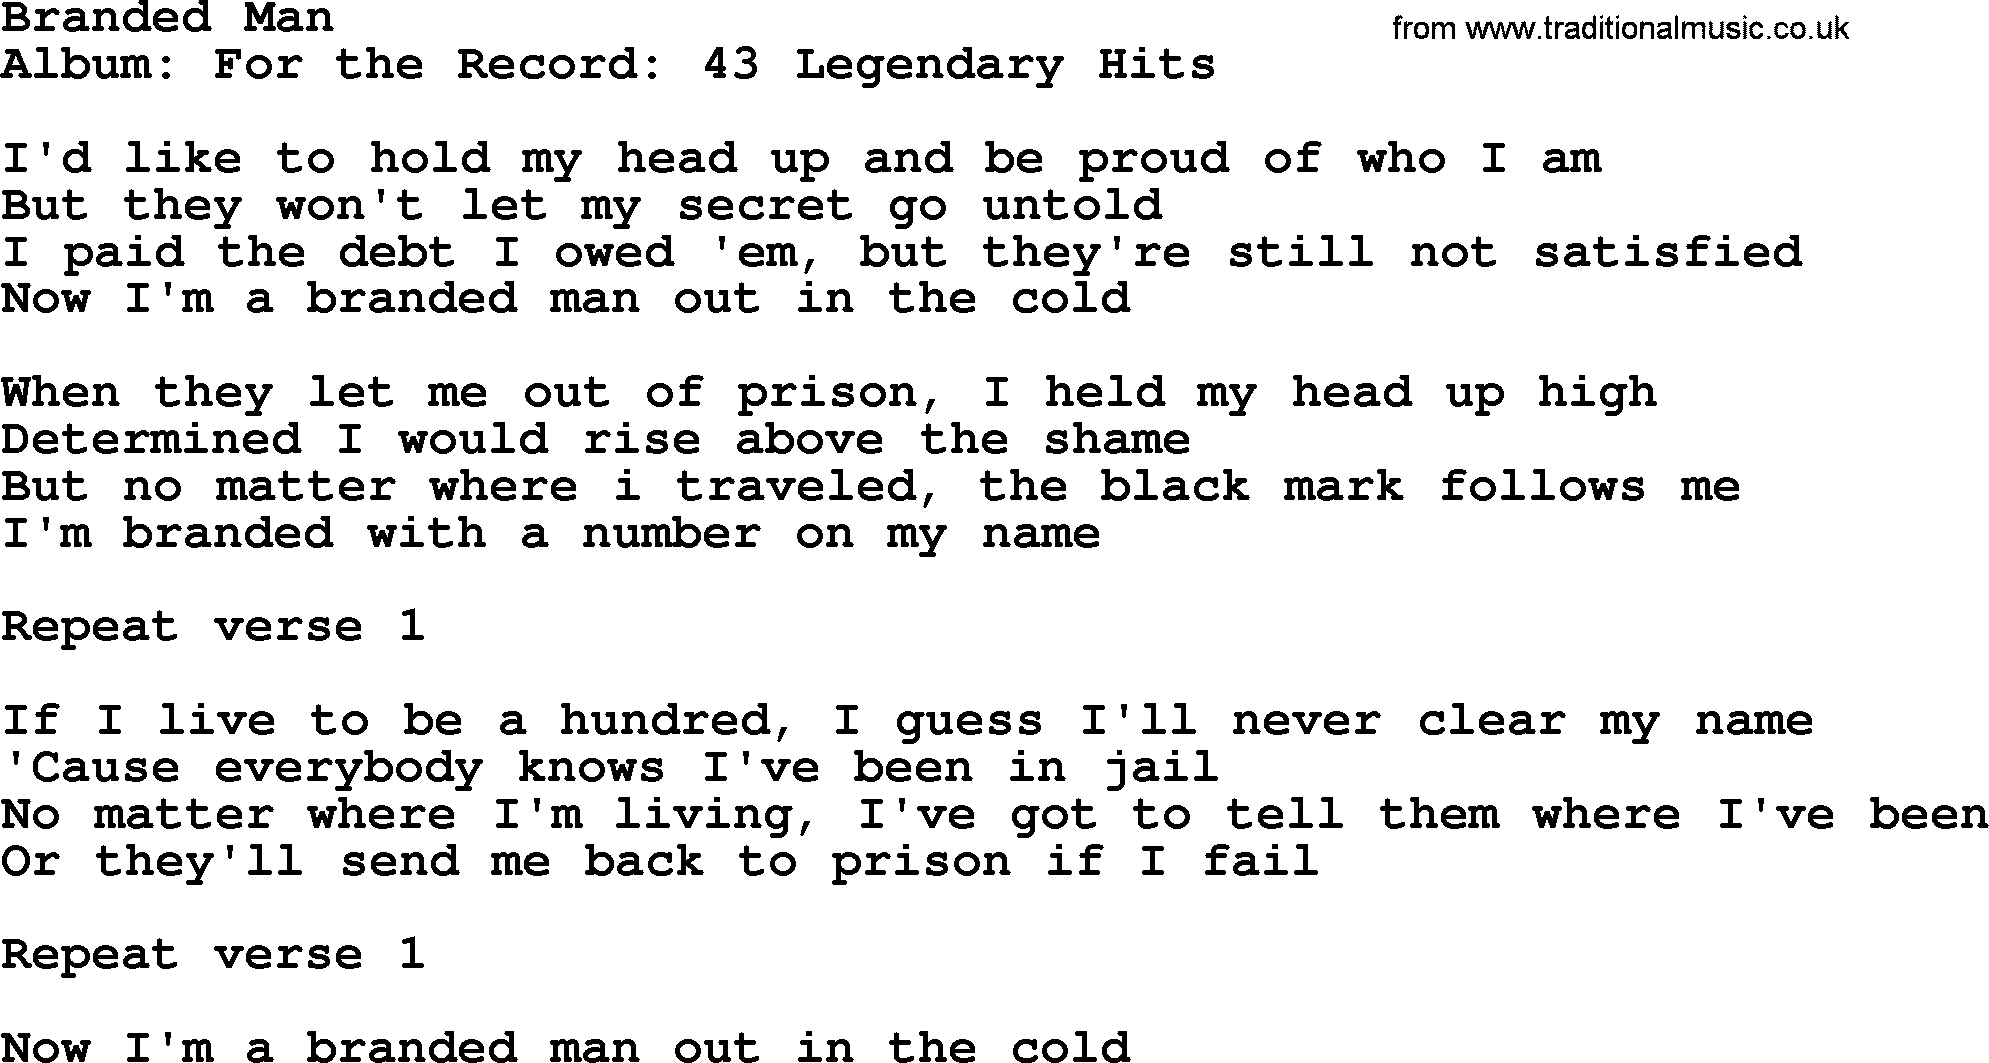 Merle Haggard song: Branded Man, lyrics.